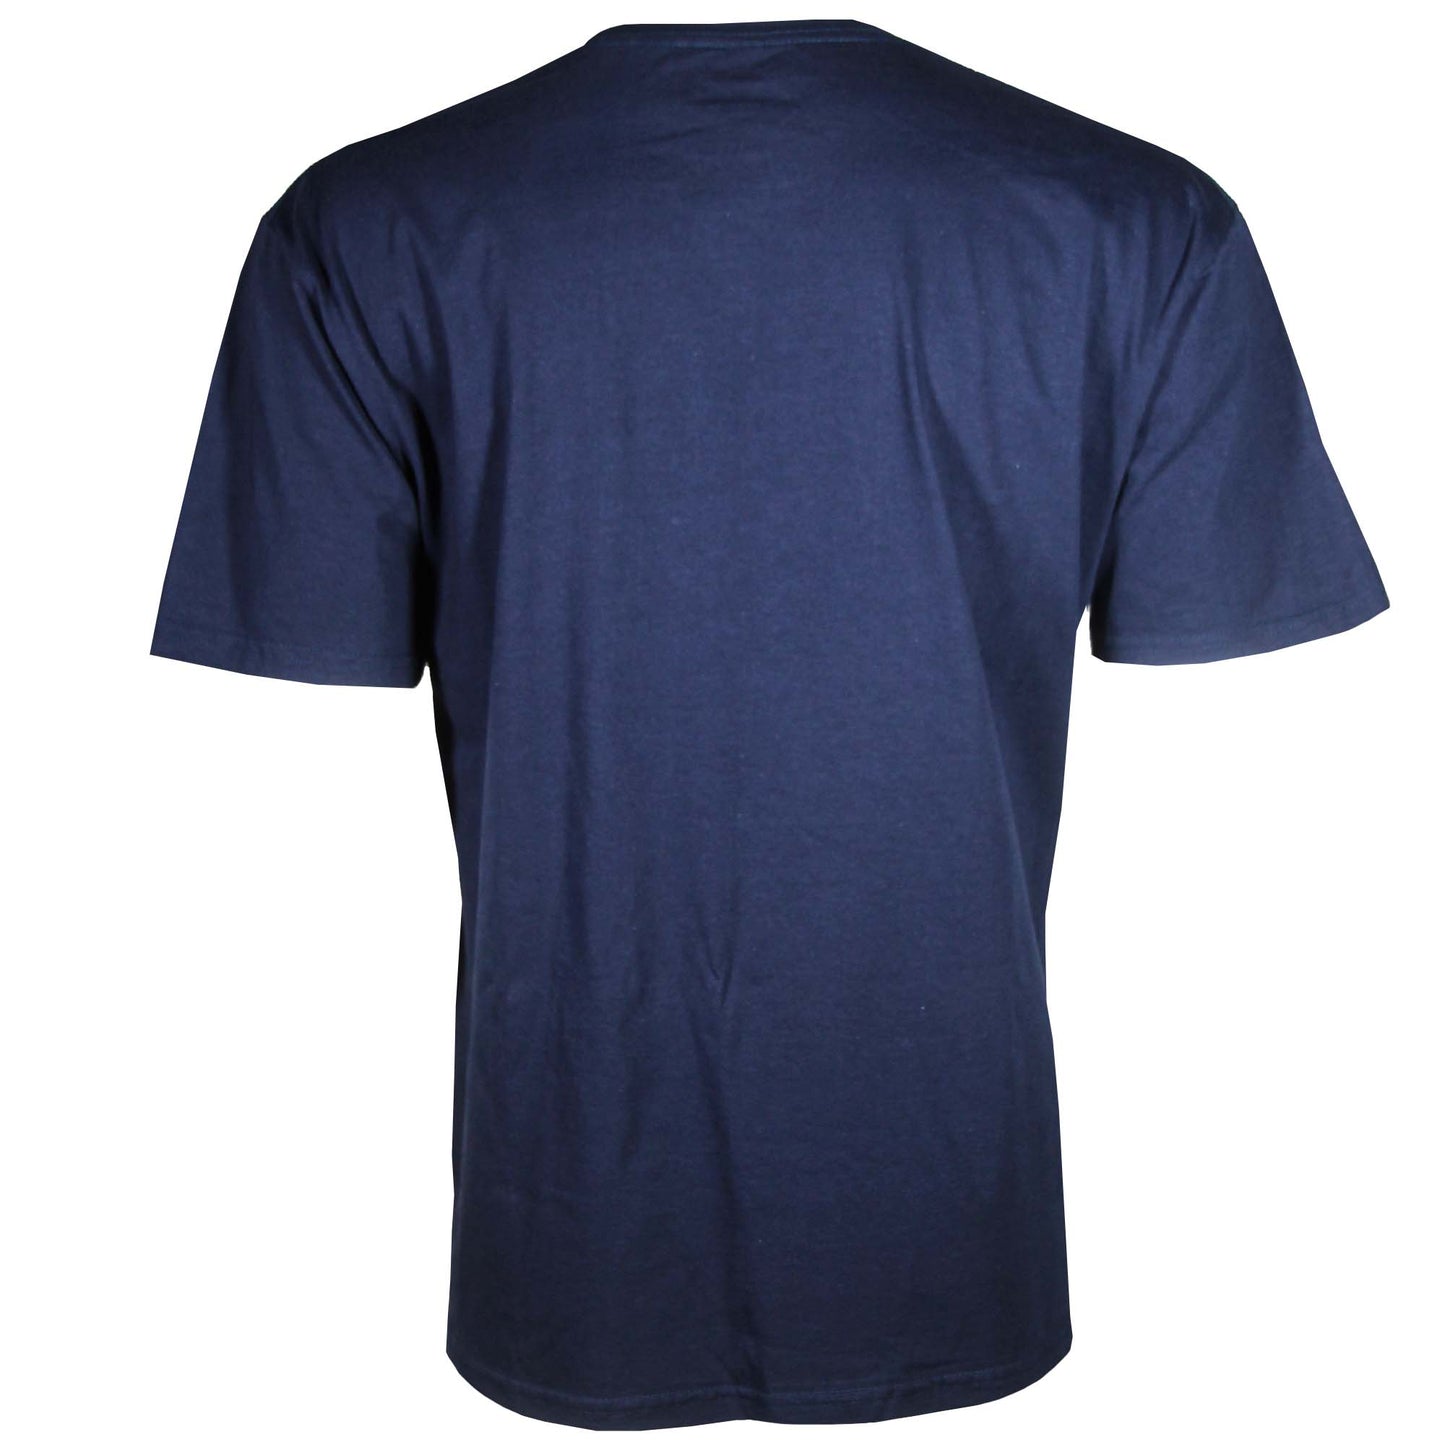 The Old Man Navy Blue Round Neck T-Shirt